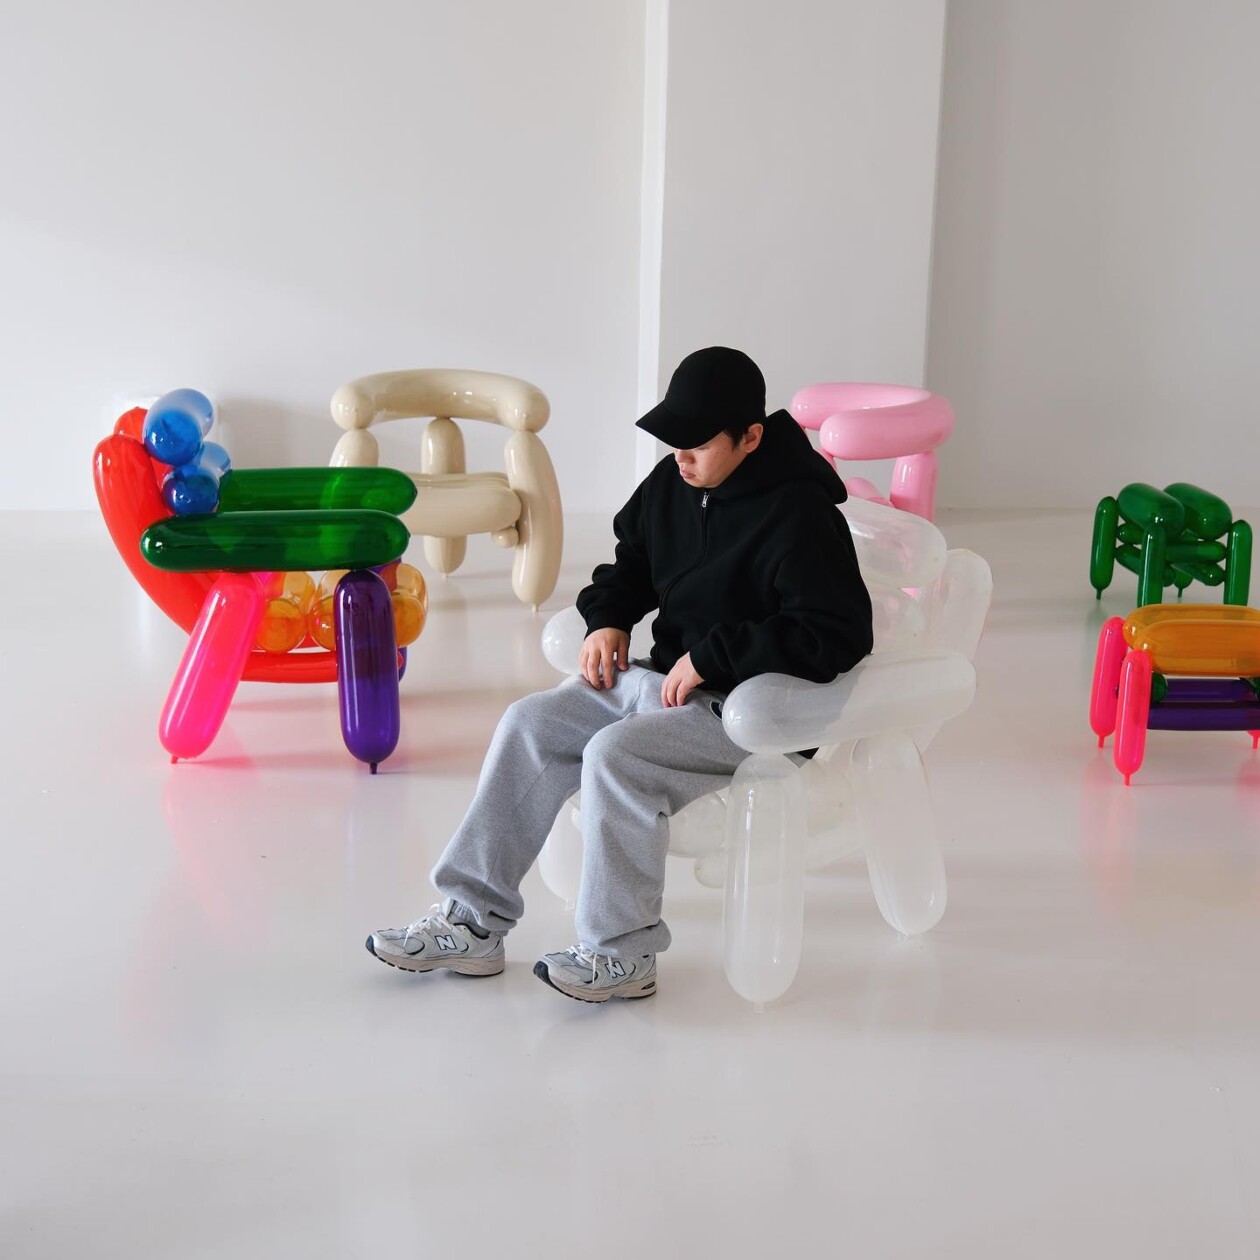 The Amusing Balloon Shaped Furniture Of Korean Artist And Designer Seungjin Yang (16)